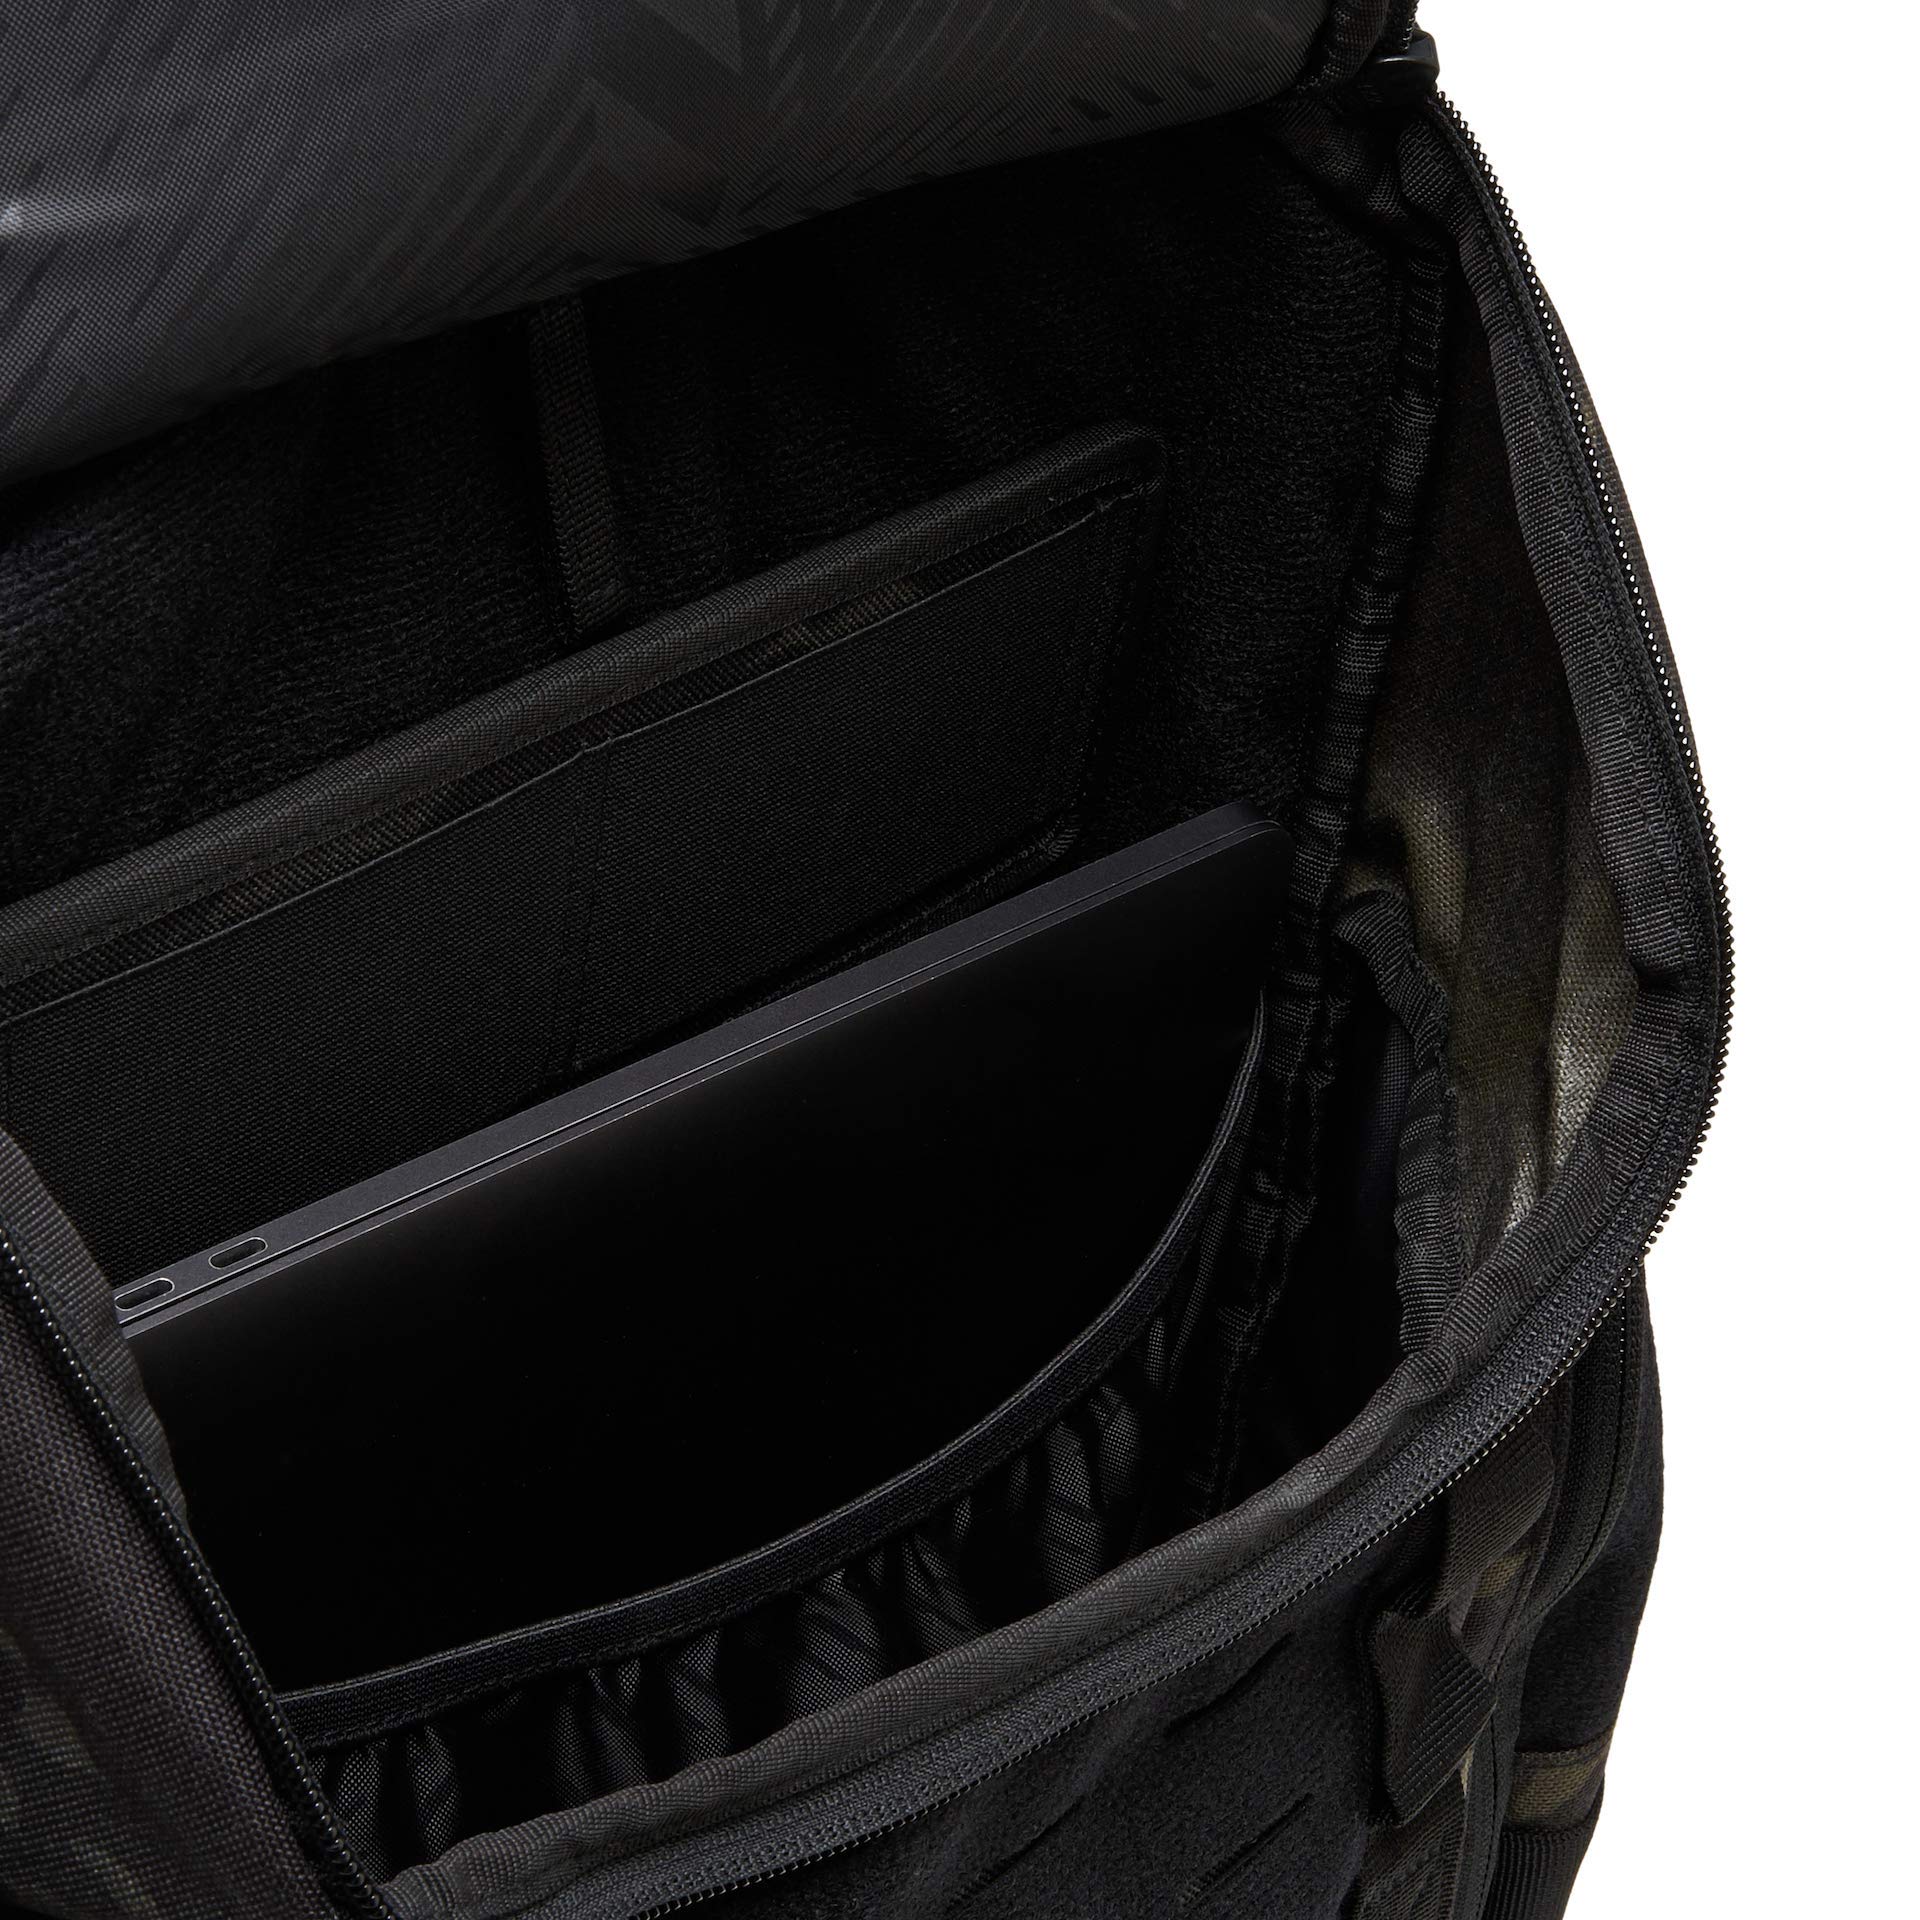 Mua Oakley Link Pack Miltac  Backpack Black Multicam trên Amazon Mỹ  chính hãng 2023 | Fado